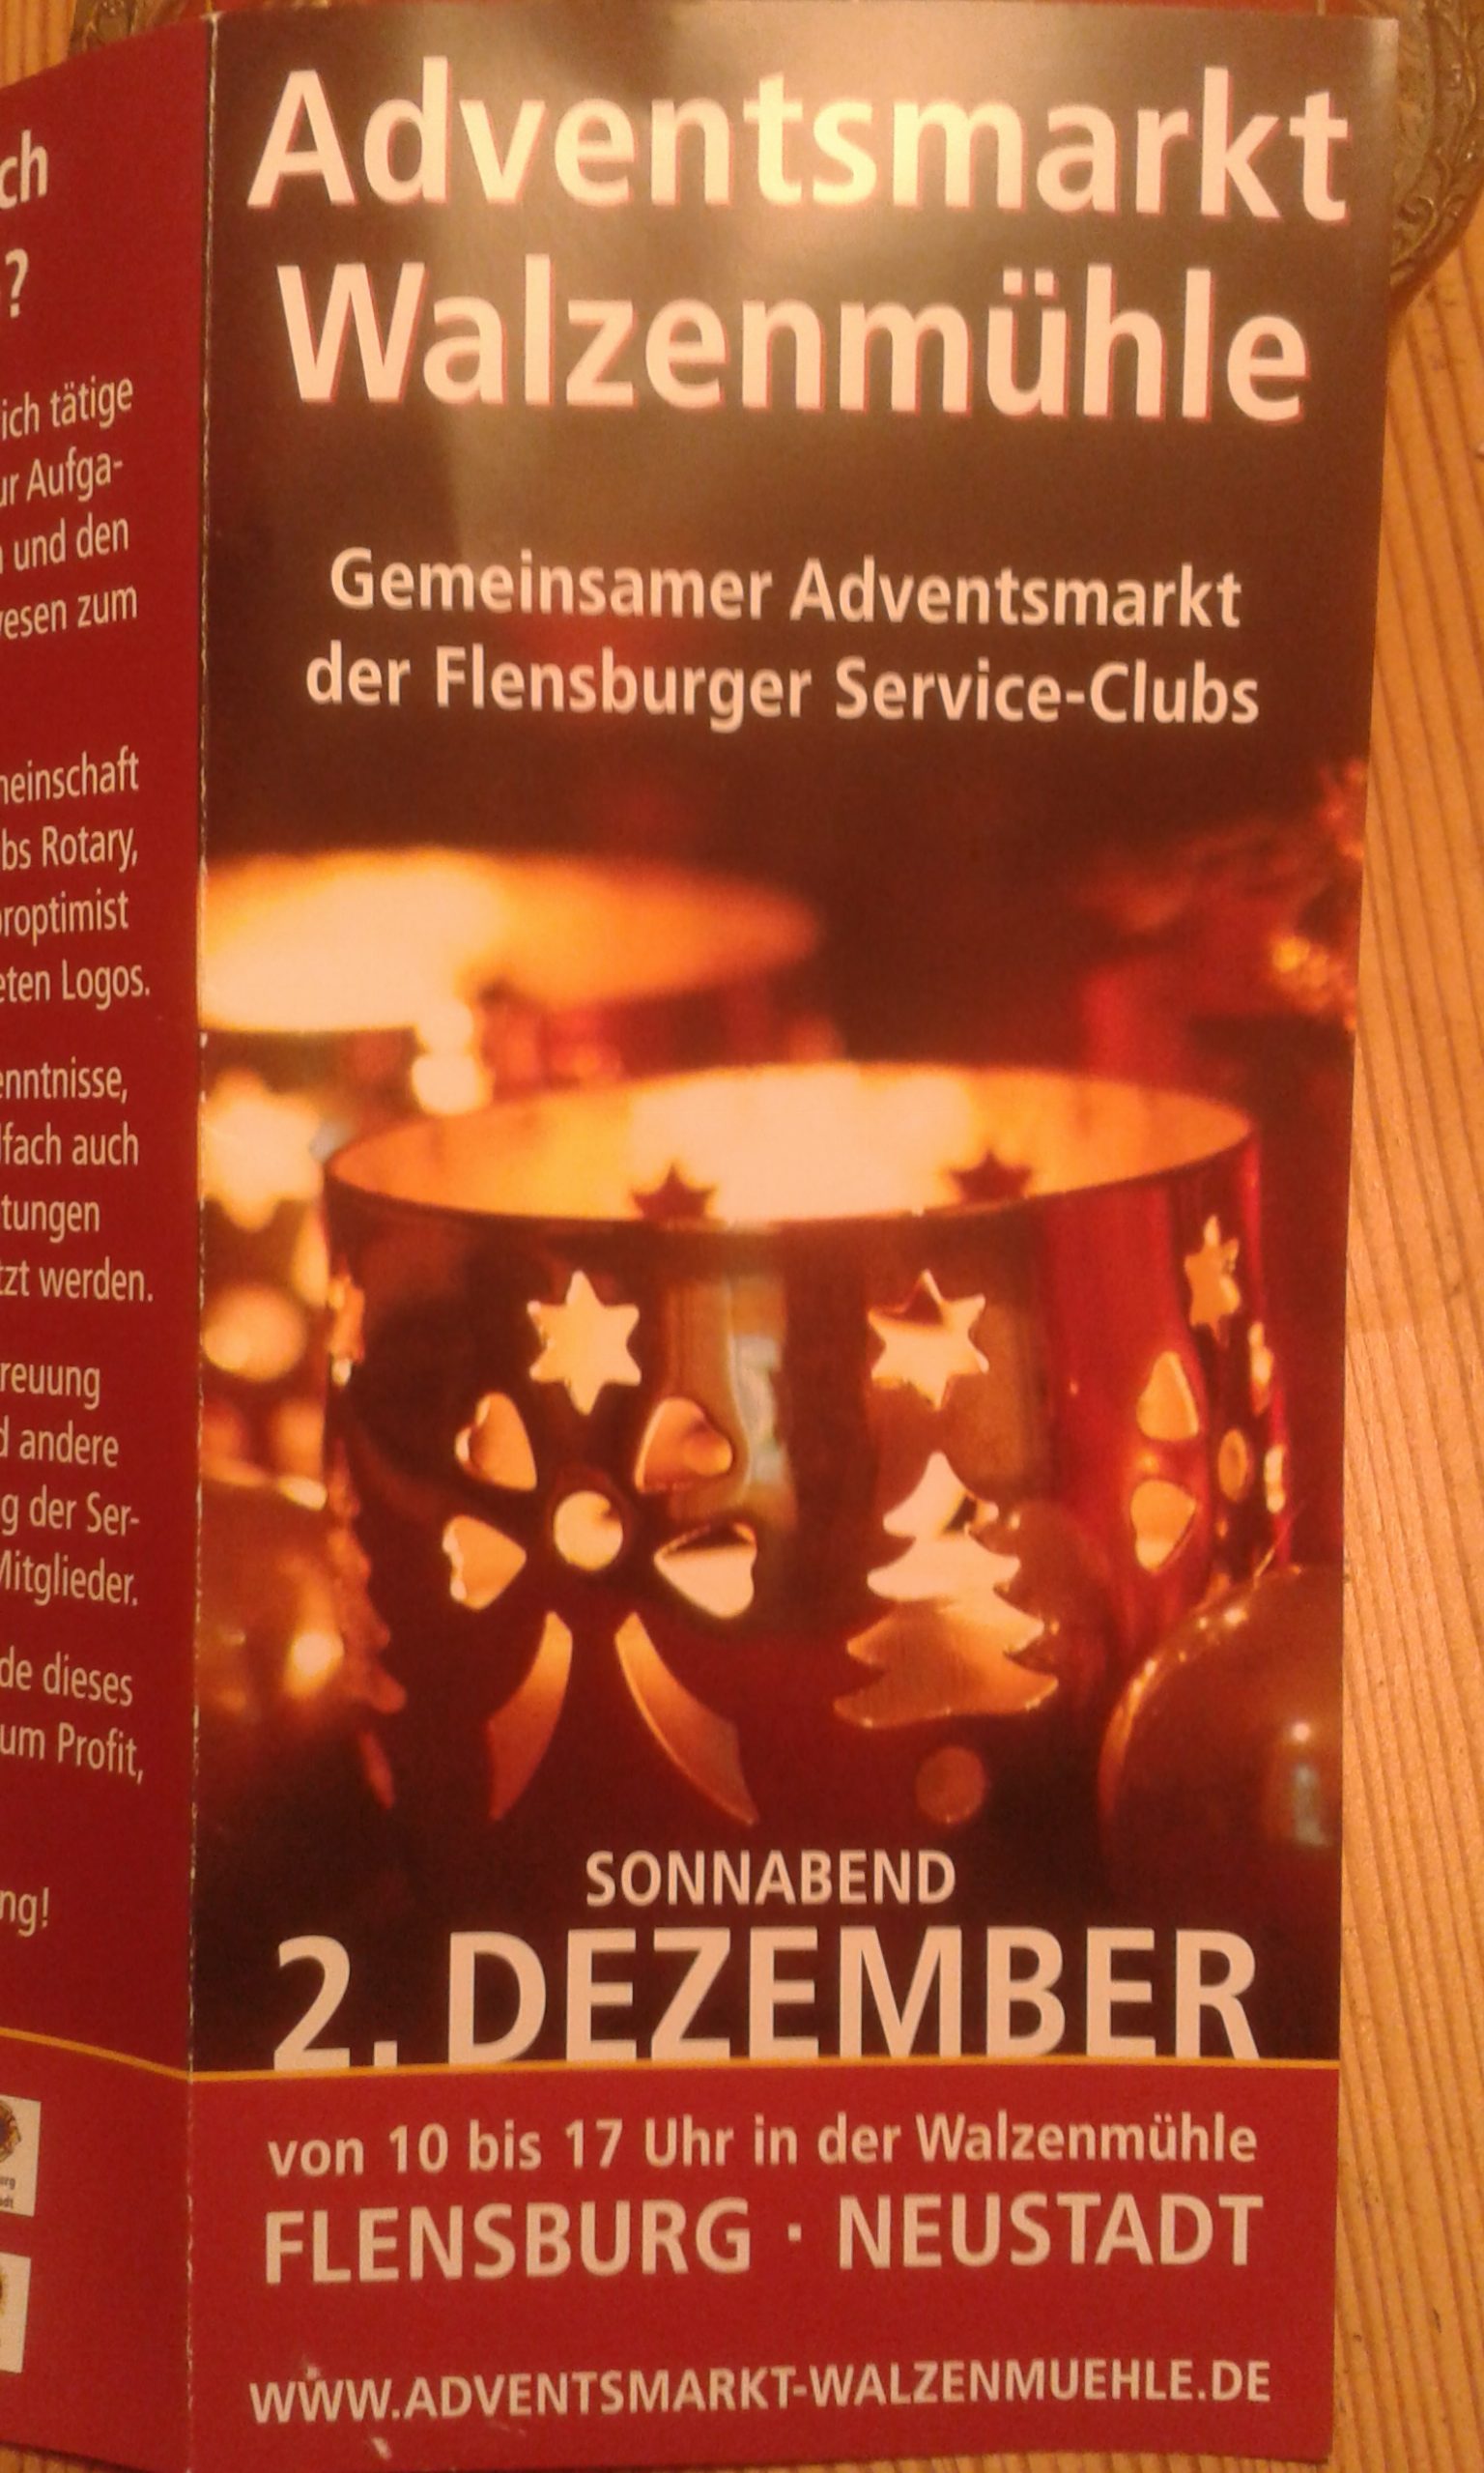 Faltblatt "Adventsmarkt Walzenmühle" Flensburg, 2. Dezember 2017